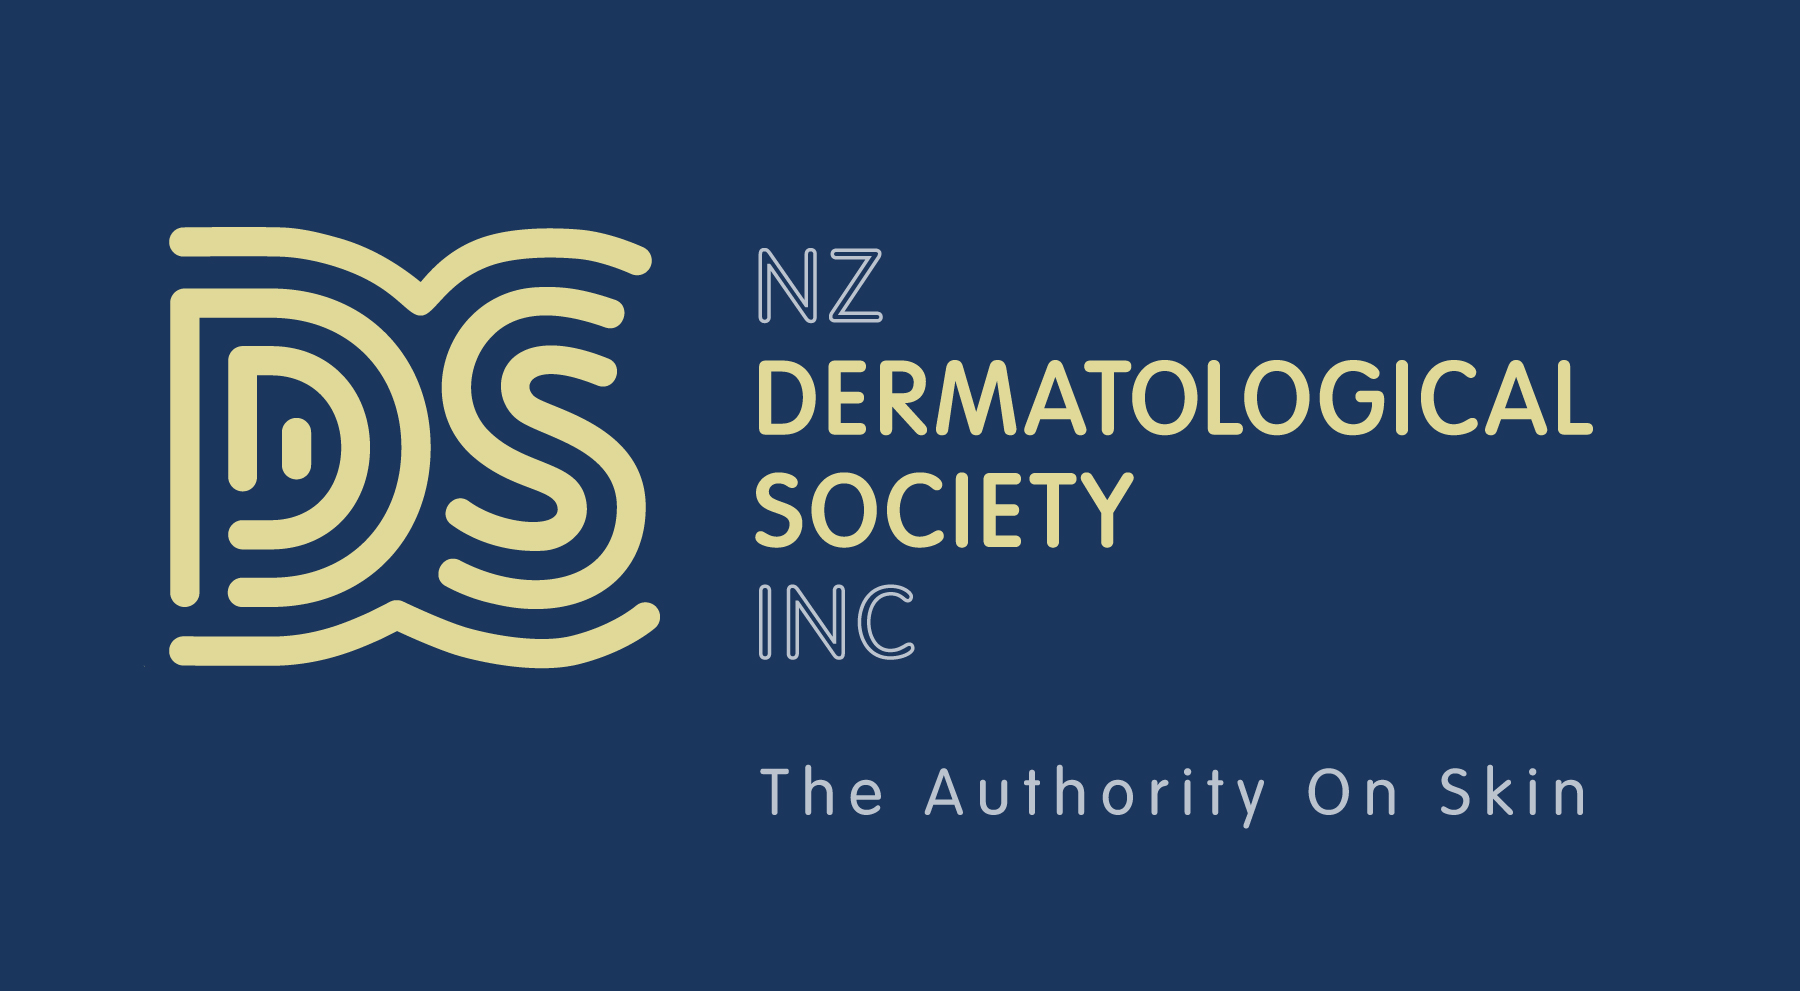 Member of NZ Dermatological Society Inc